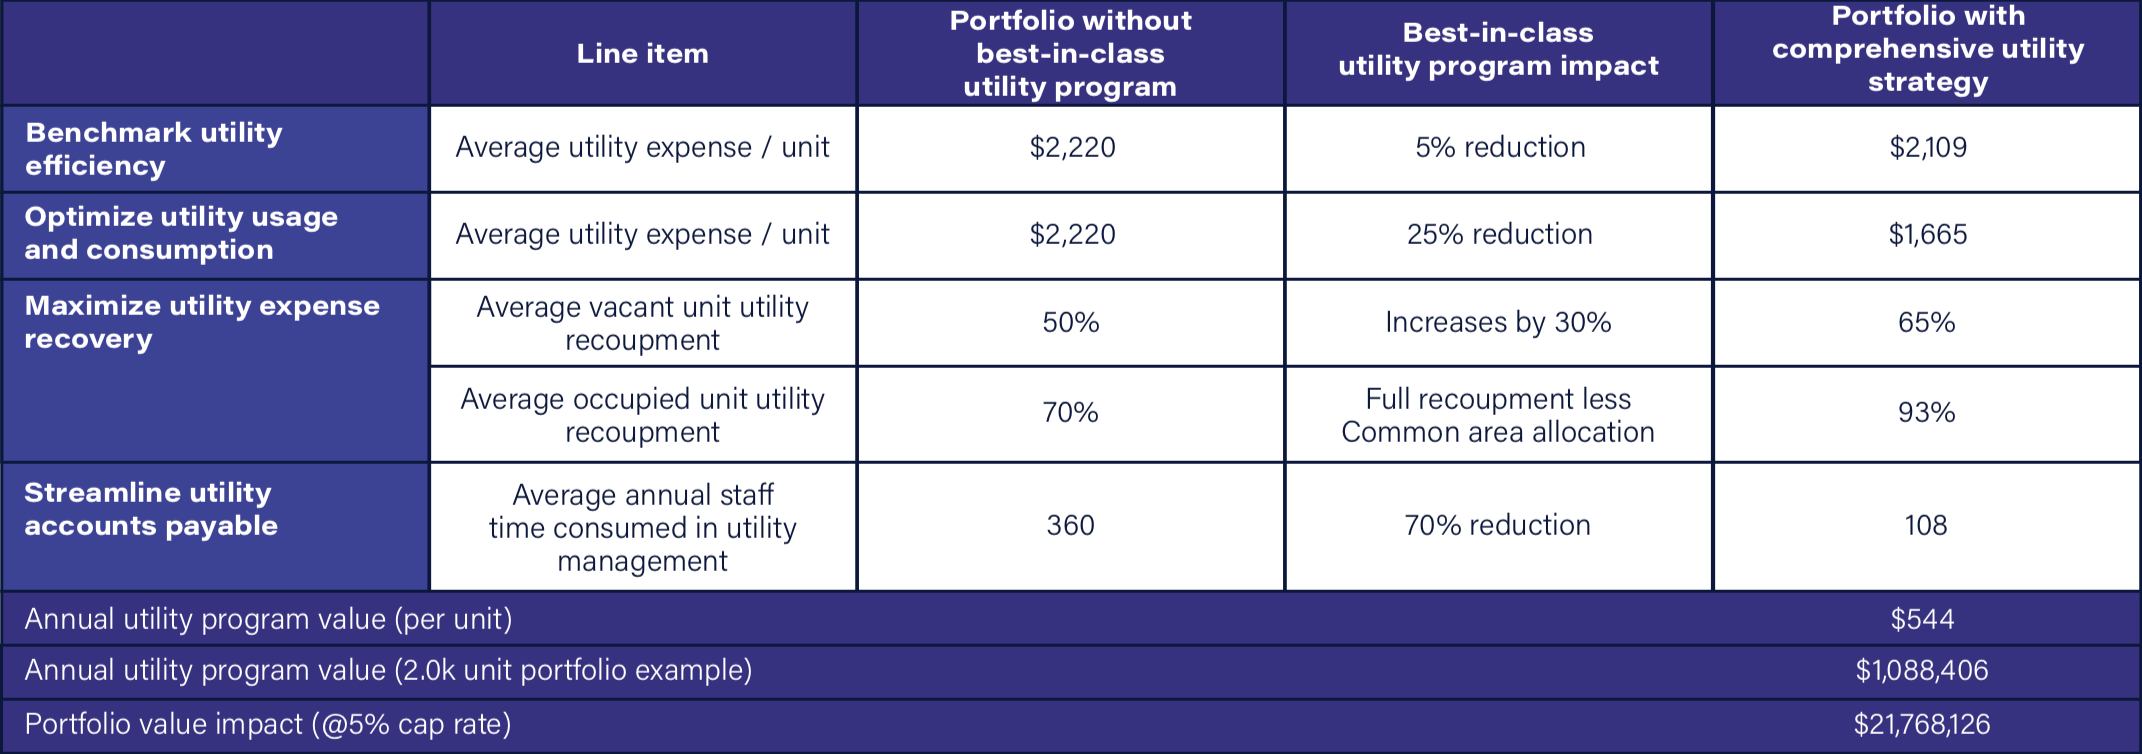 Zego Utility Program impact on a 2000 unit portfolio